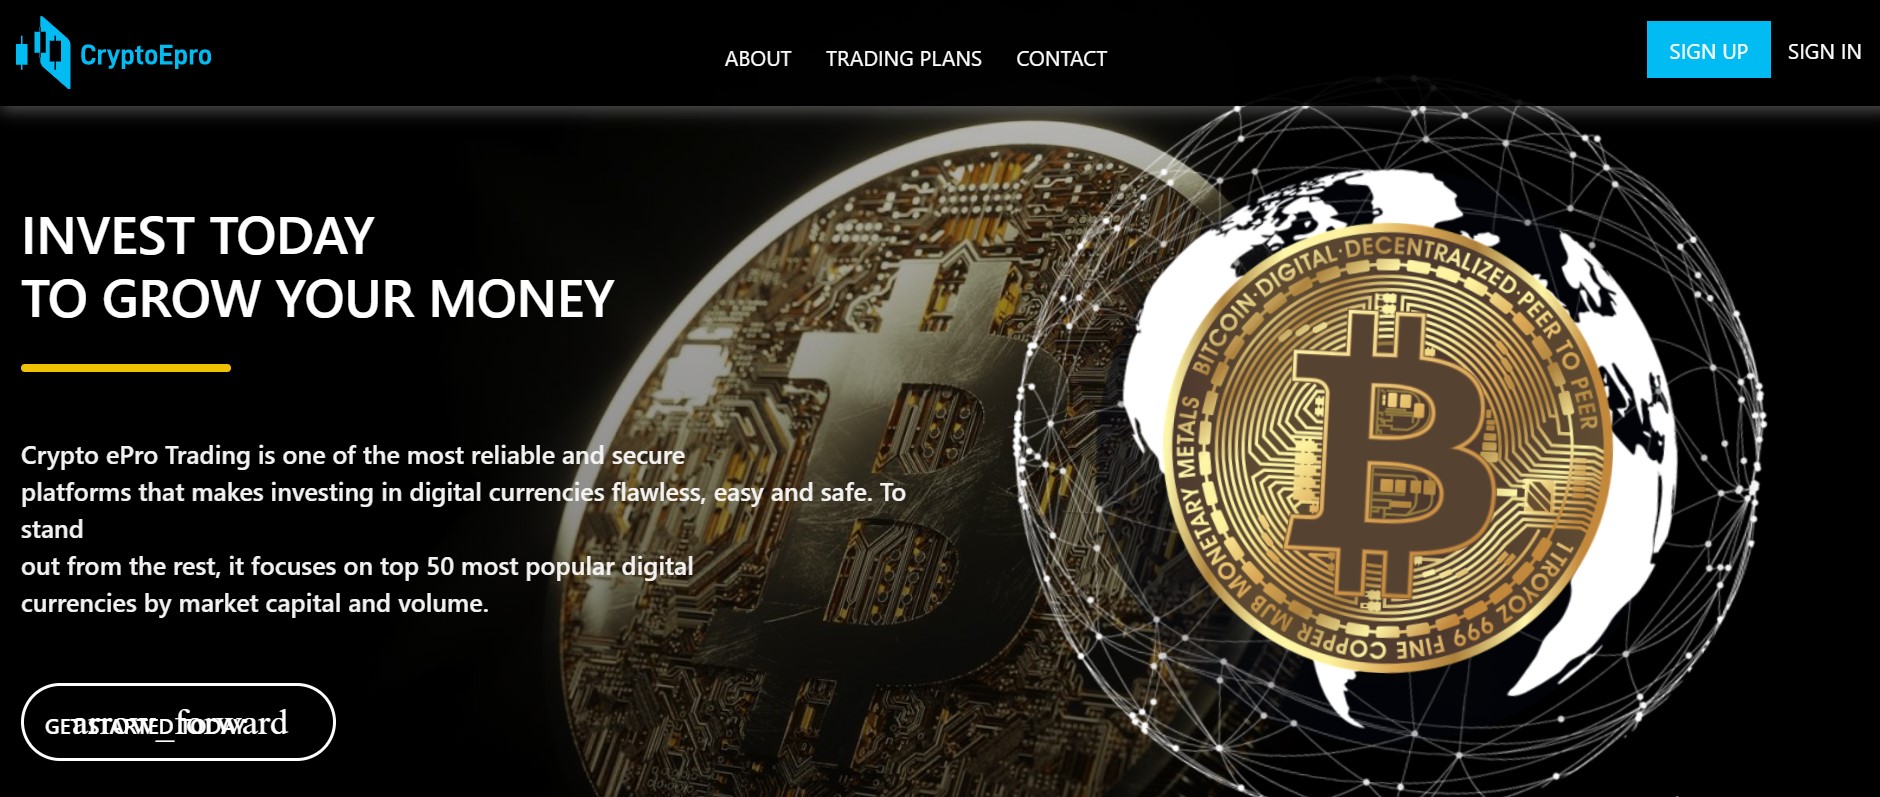 CryptoEpro website